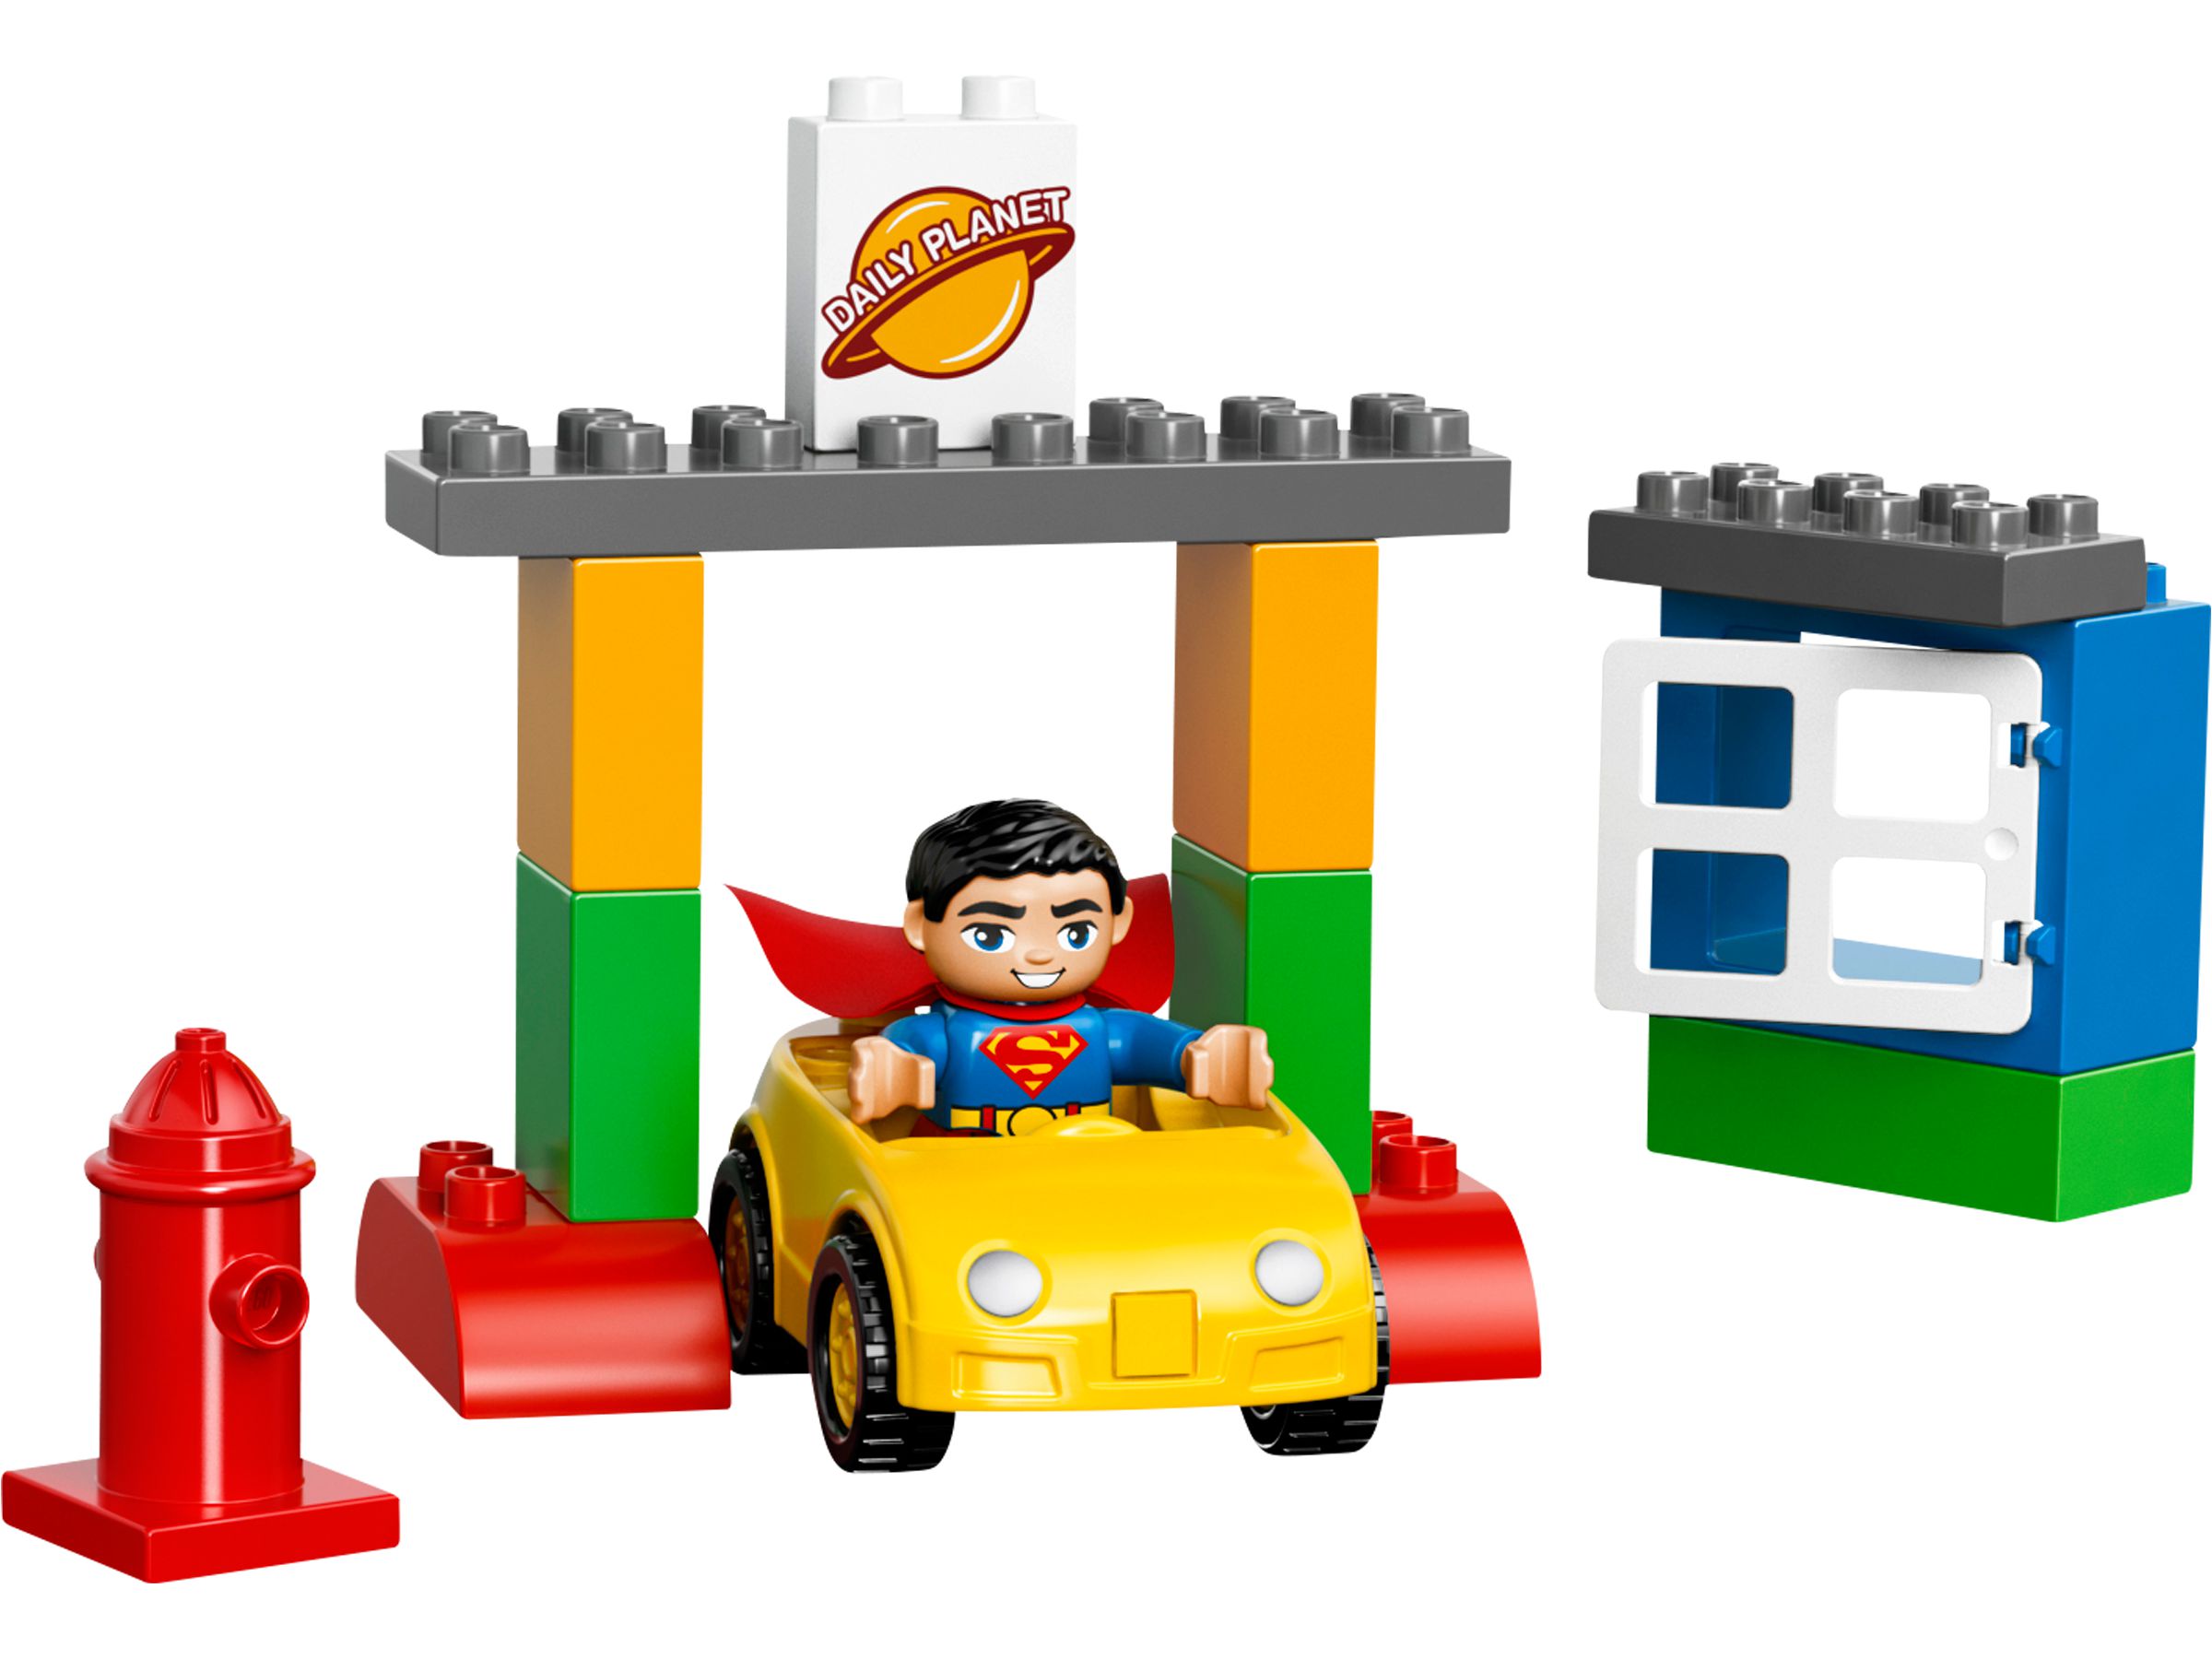 LEGO Duplo 10543 Supermans™ Rettungseinsatz LEGO_10543_alt2.jpg